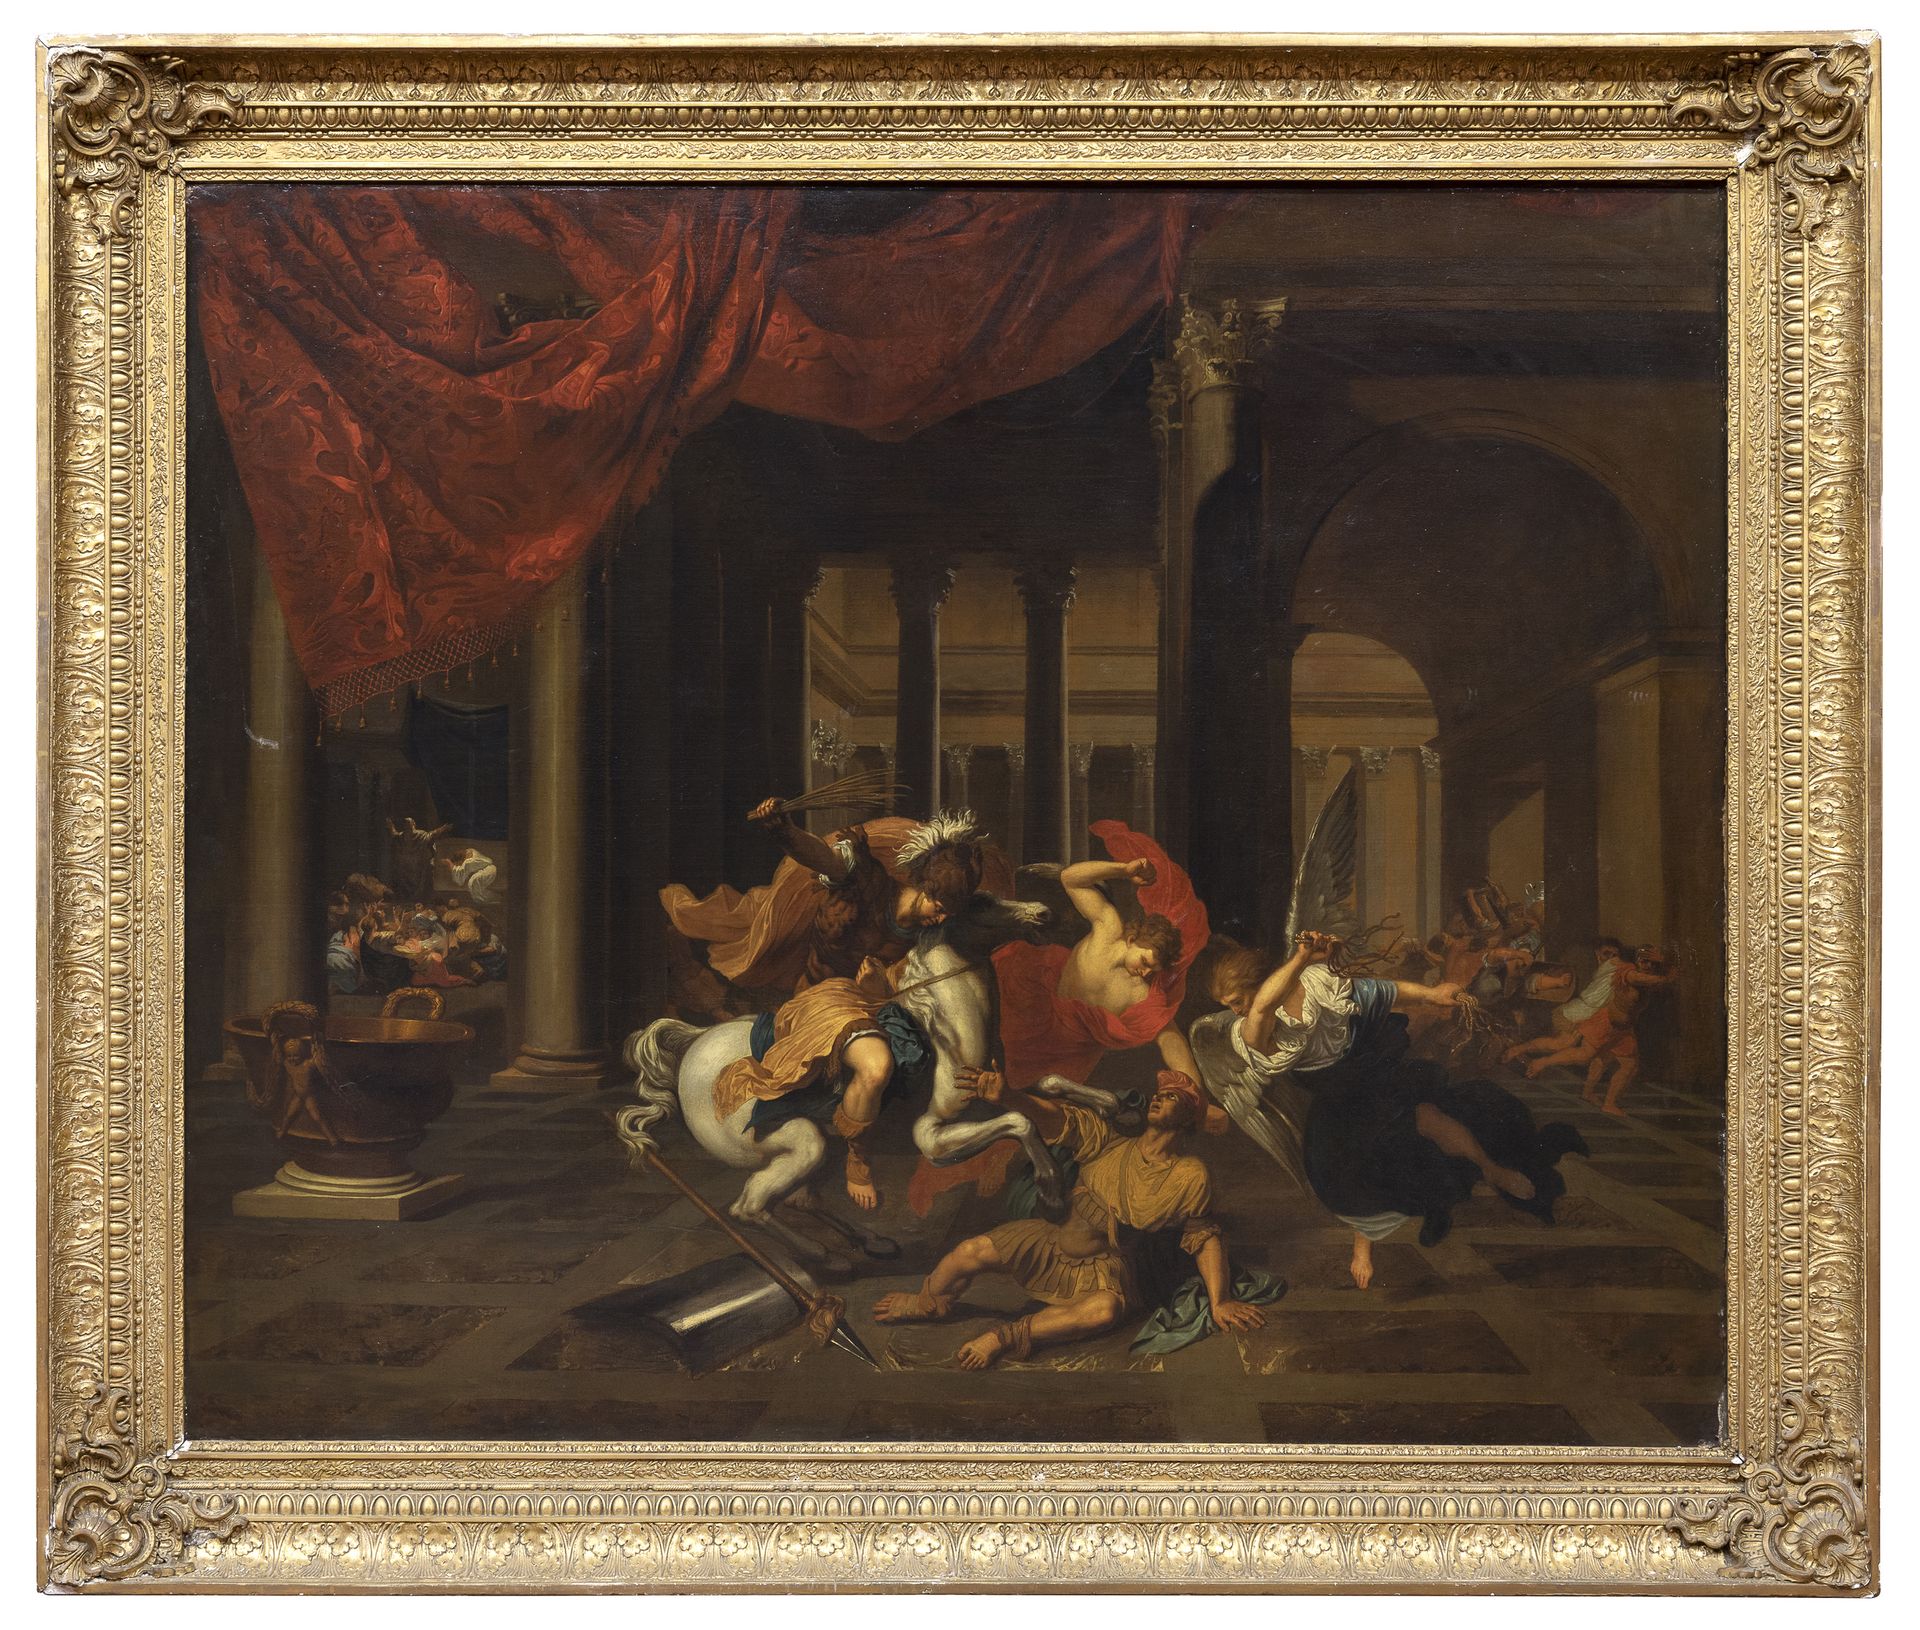 Null PIERRE PAUL PRUD'HON, att.

(克吕尼1758 - 巴黎1823)



将伊利奥多鲁斯赶出圣殿

布面油画，152 x 1&hellip;